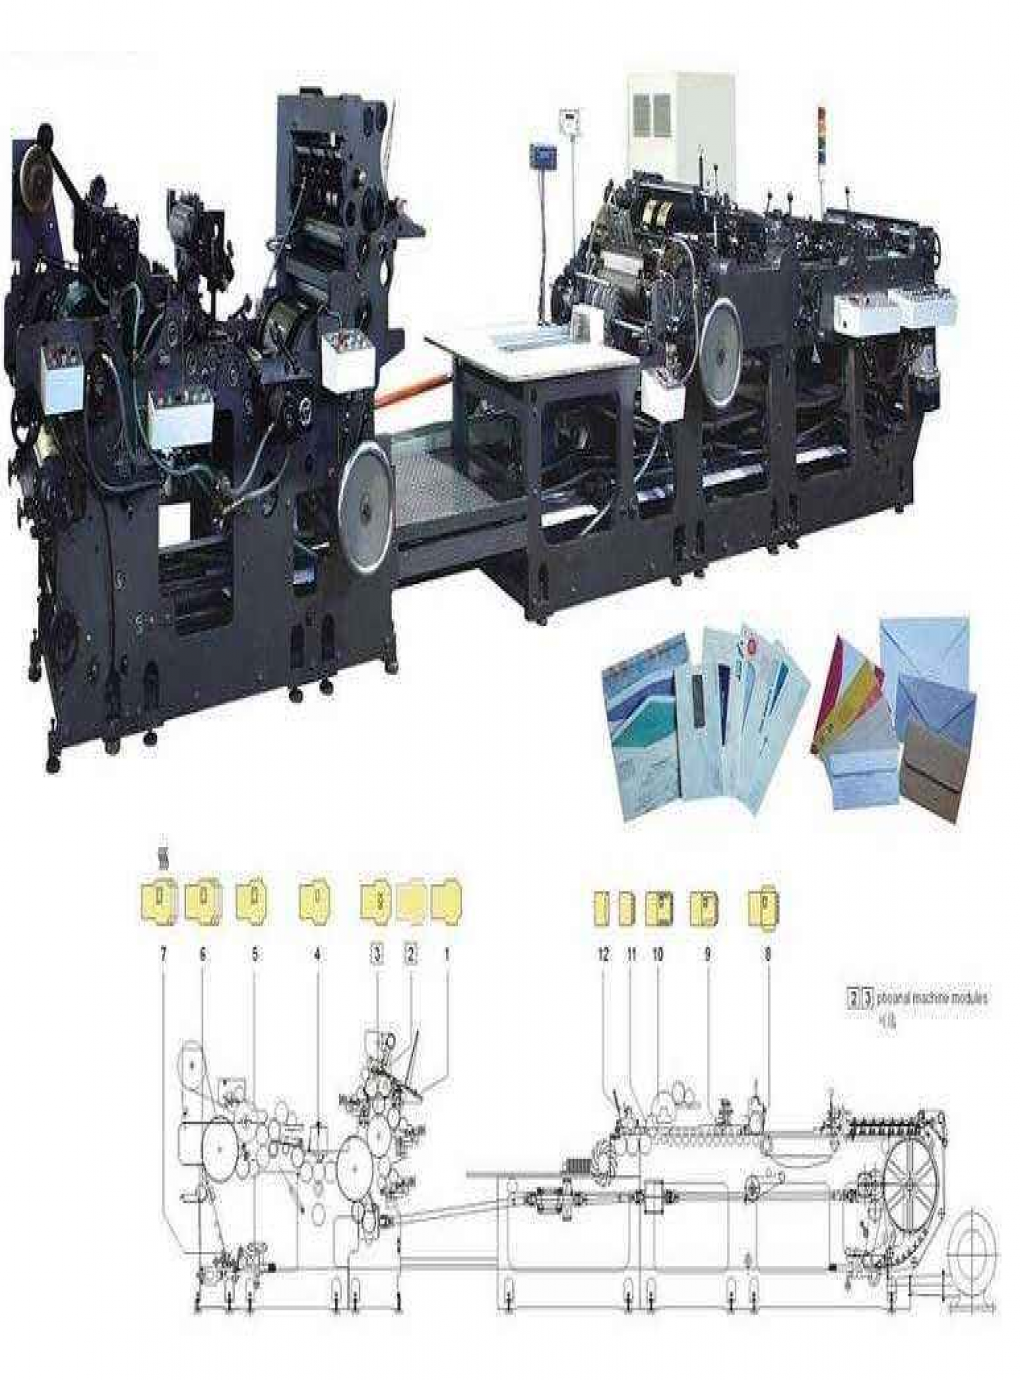 envelope making machine/production line